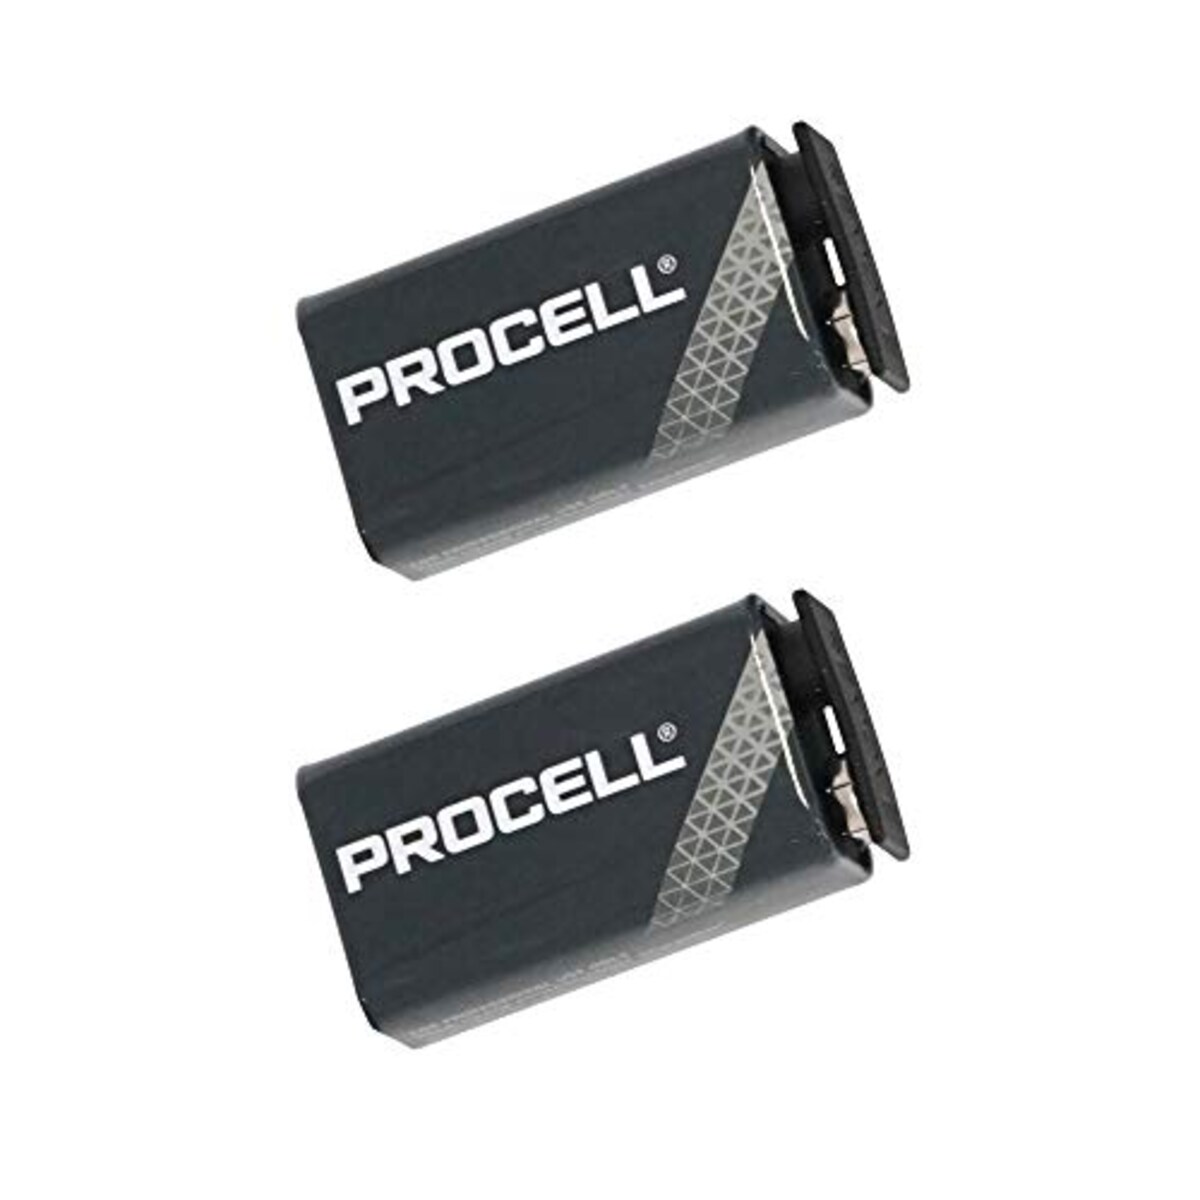  【DURACELL】PROCELL デュラセル プロセル 9V電池 エフェクター/楽器用アルカリ電池 2個セット DP-9V-2pcs画像2 